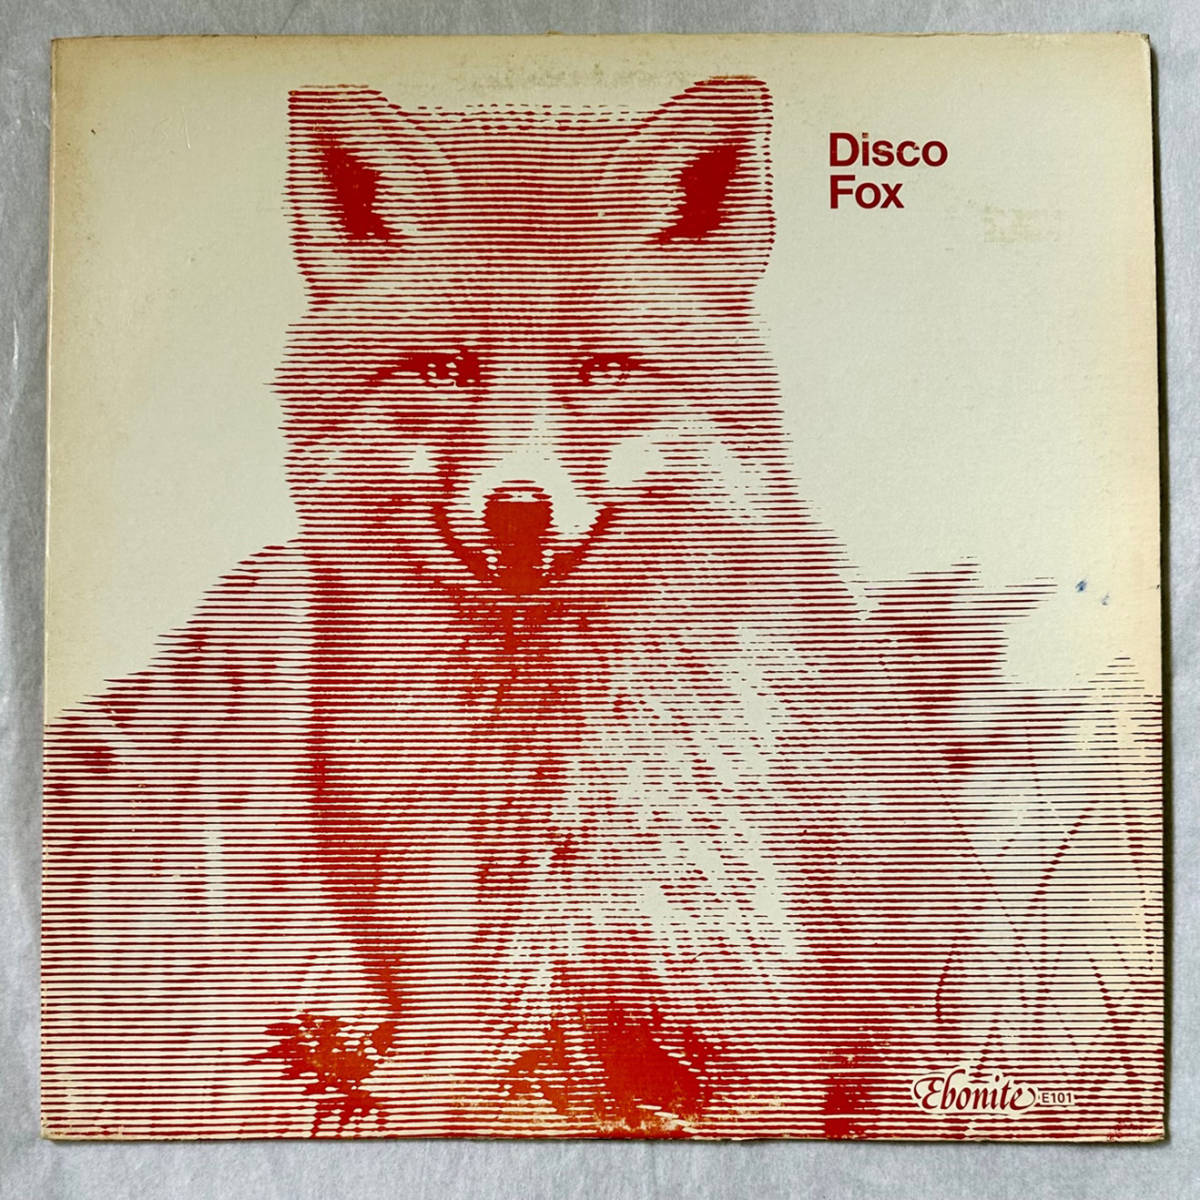 The Disco Fox